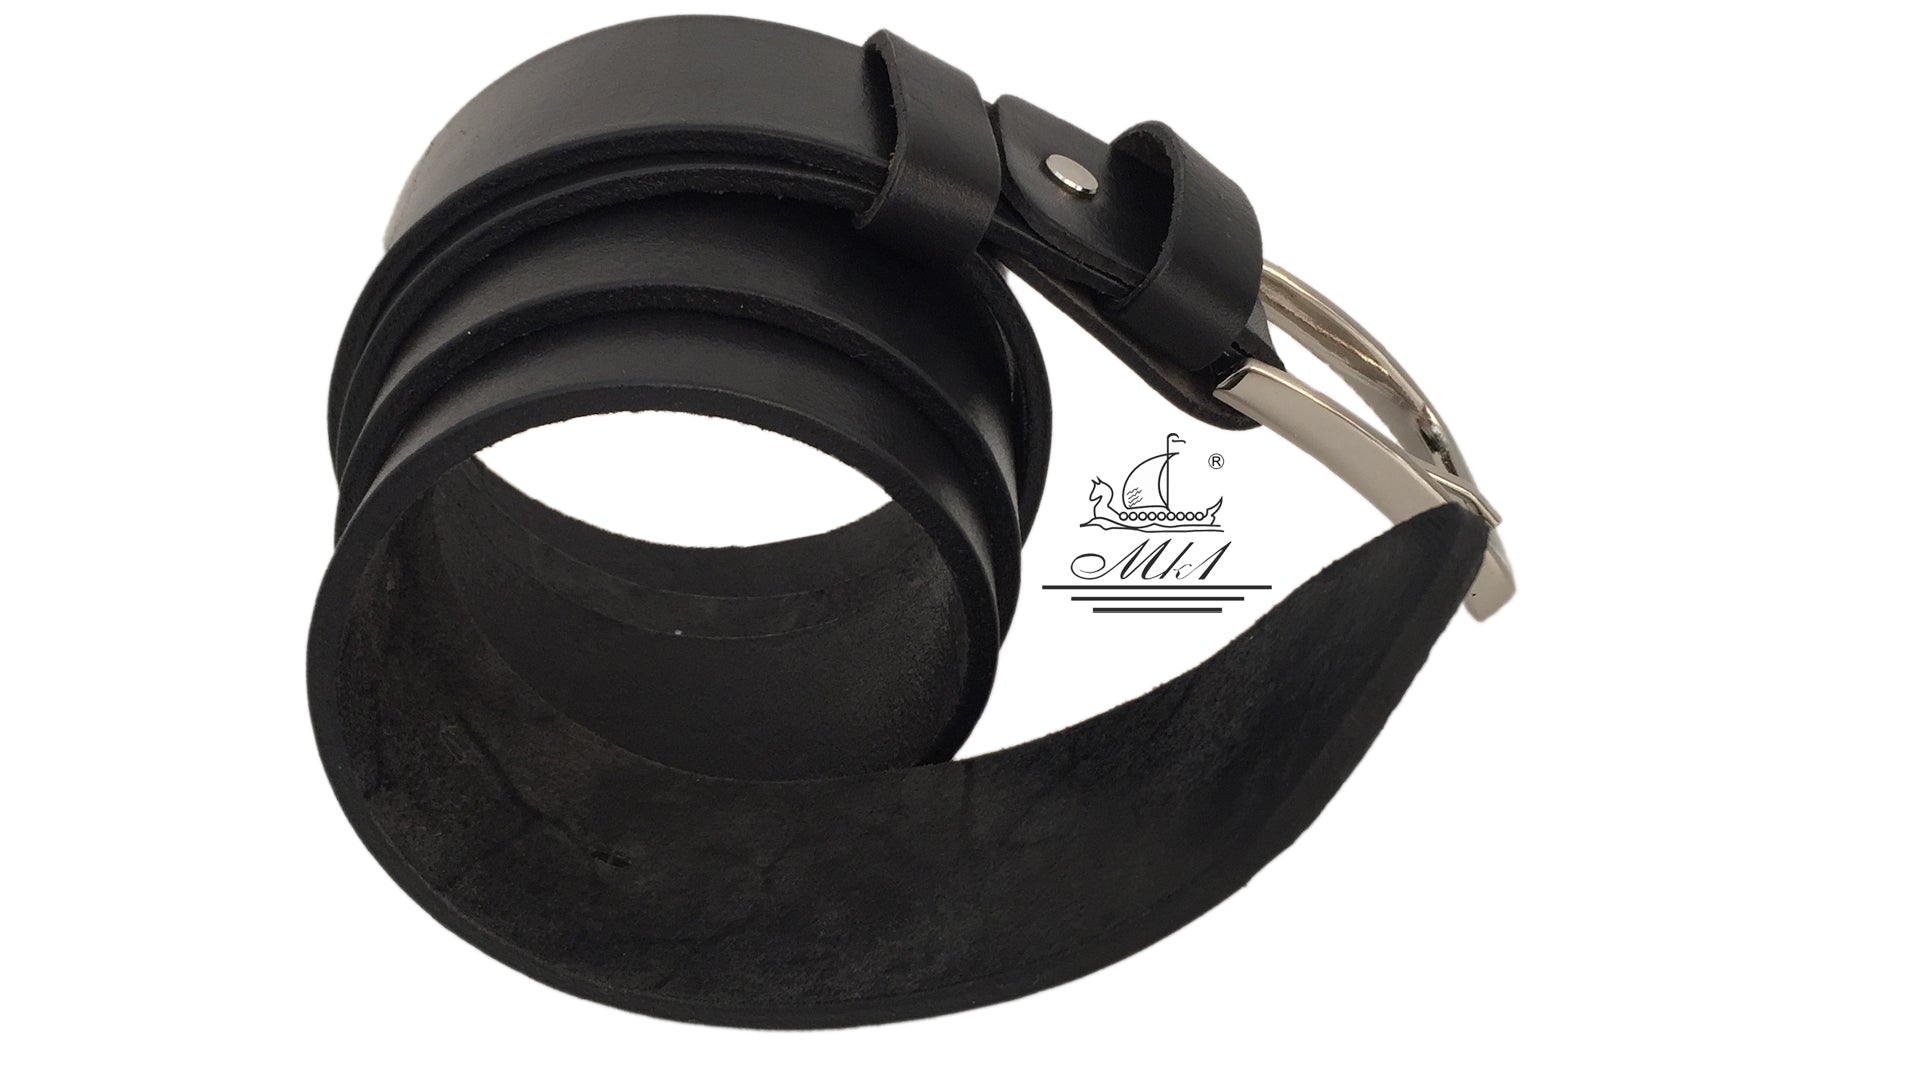 n2699/40mg Hand made leather belt